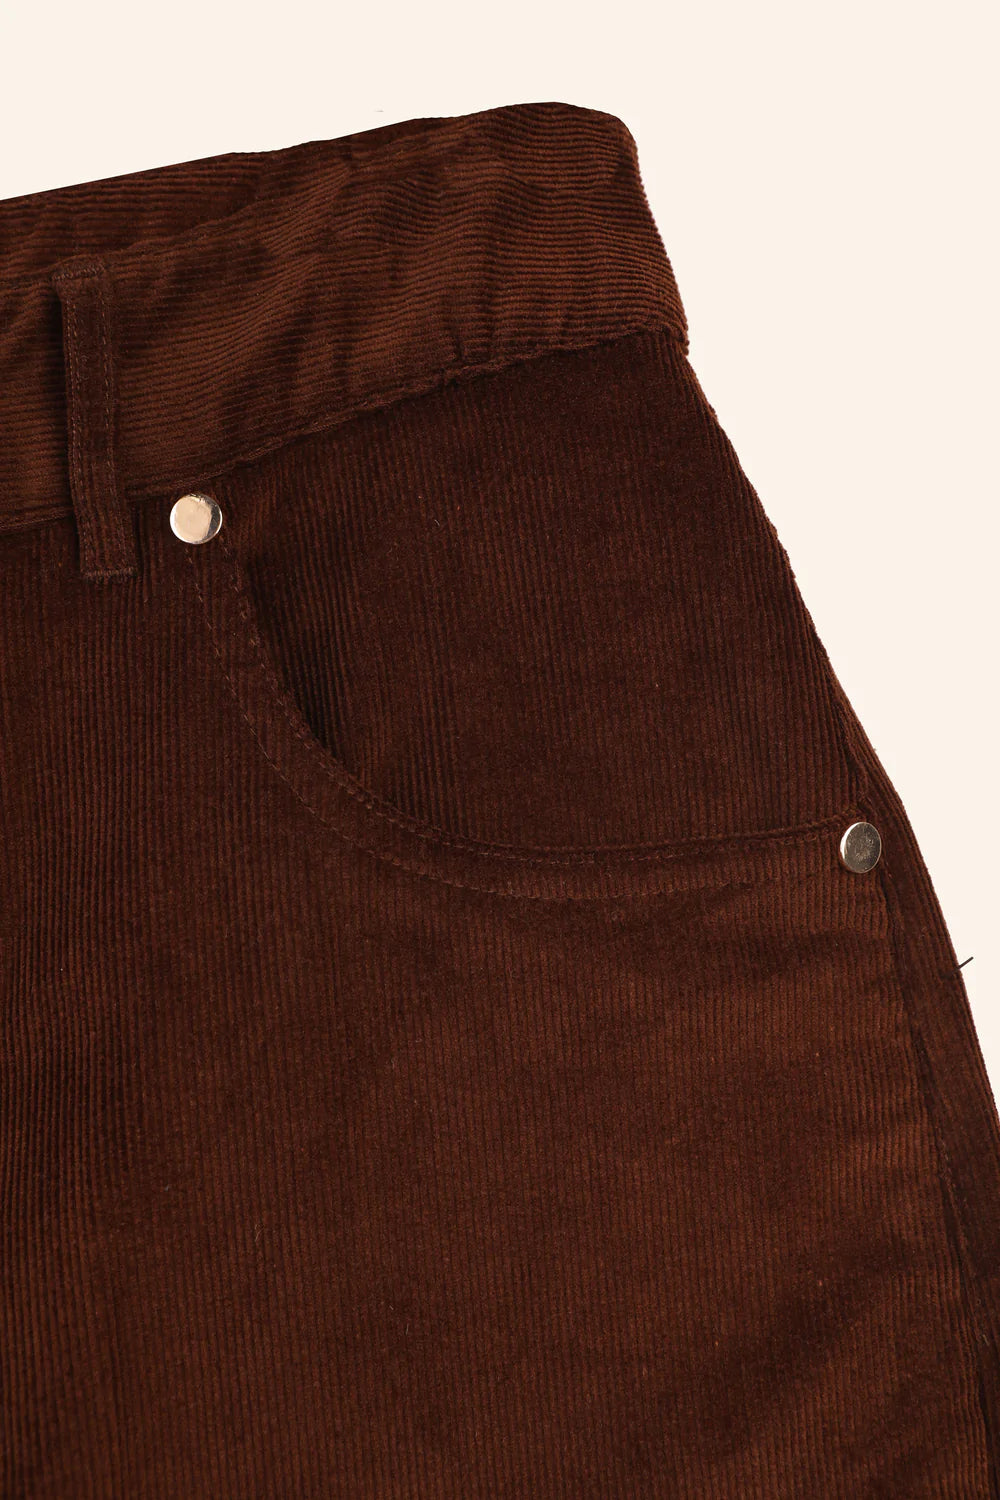 Meadows Heather Trousers brown-Meadows brown corduroy pants-Idun-St. Paul